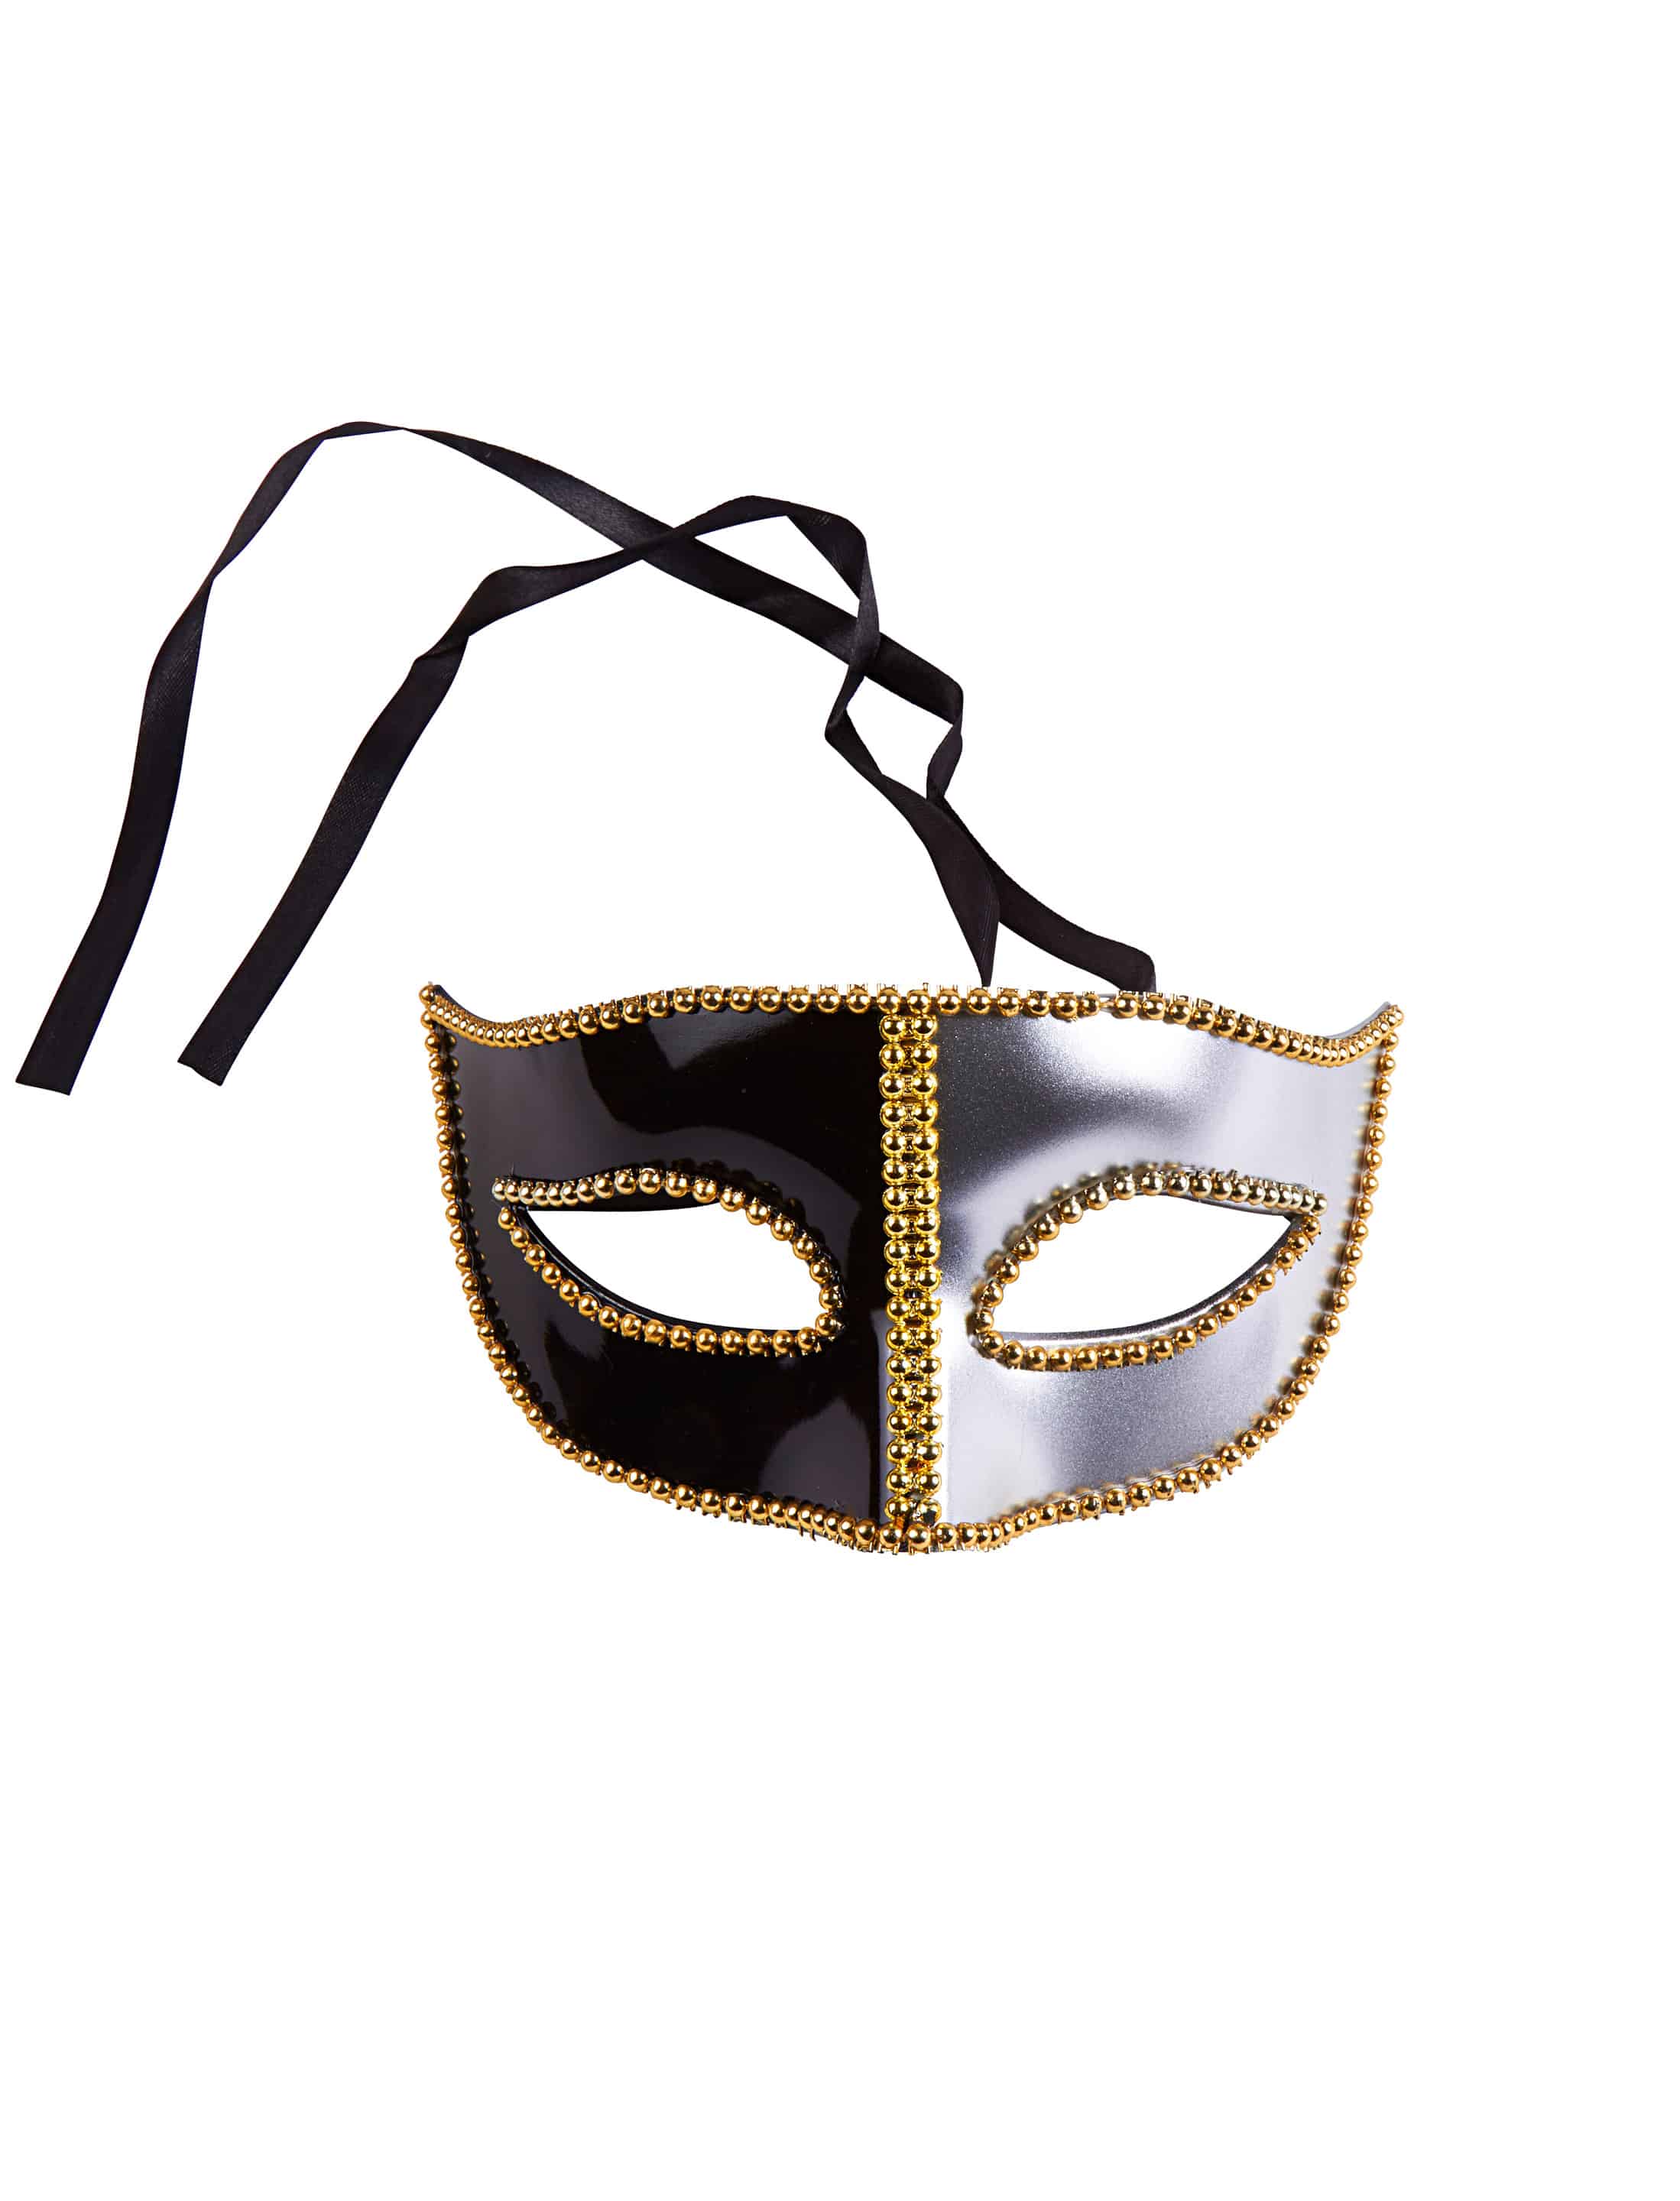 Maske Domino de luxe schwarz/silber